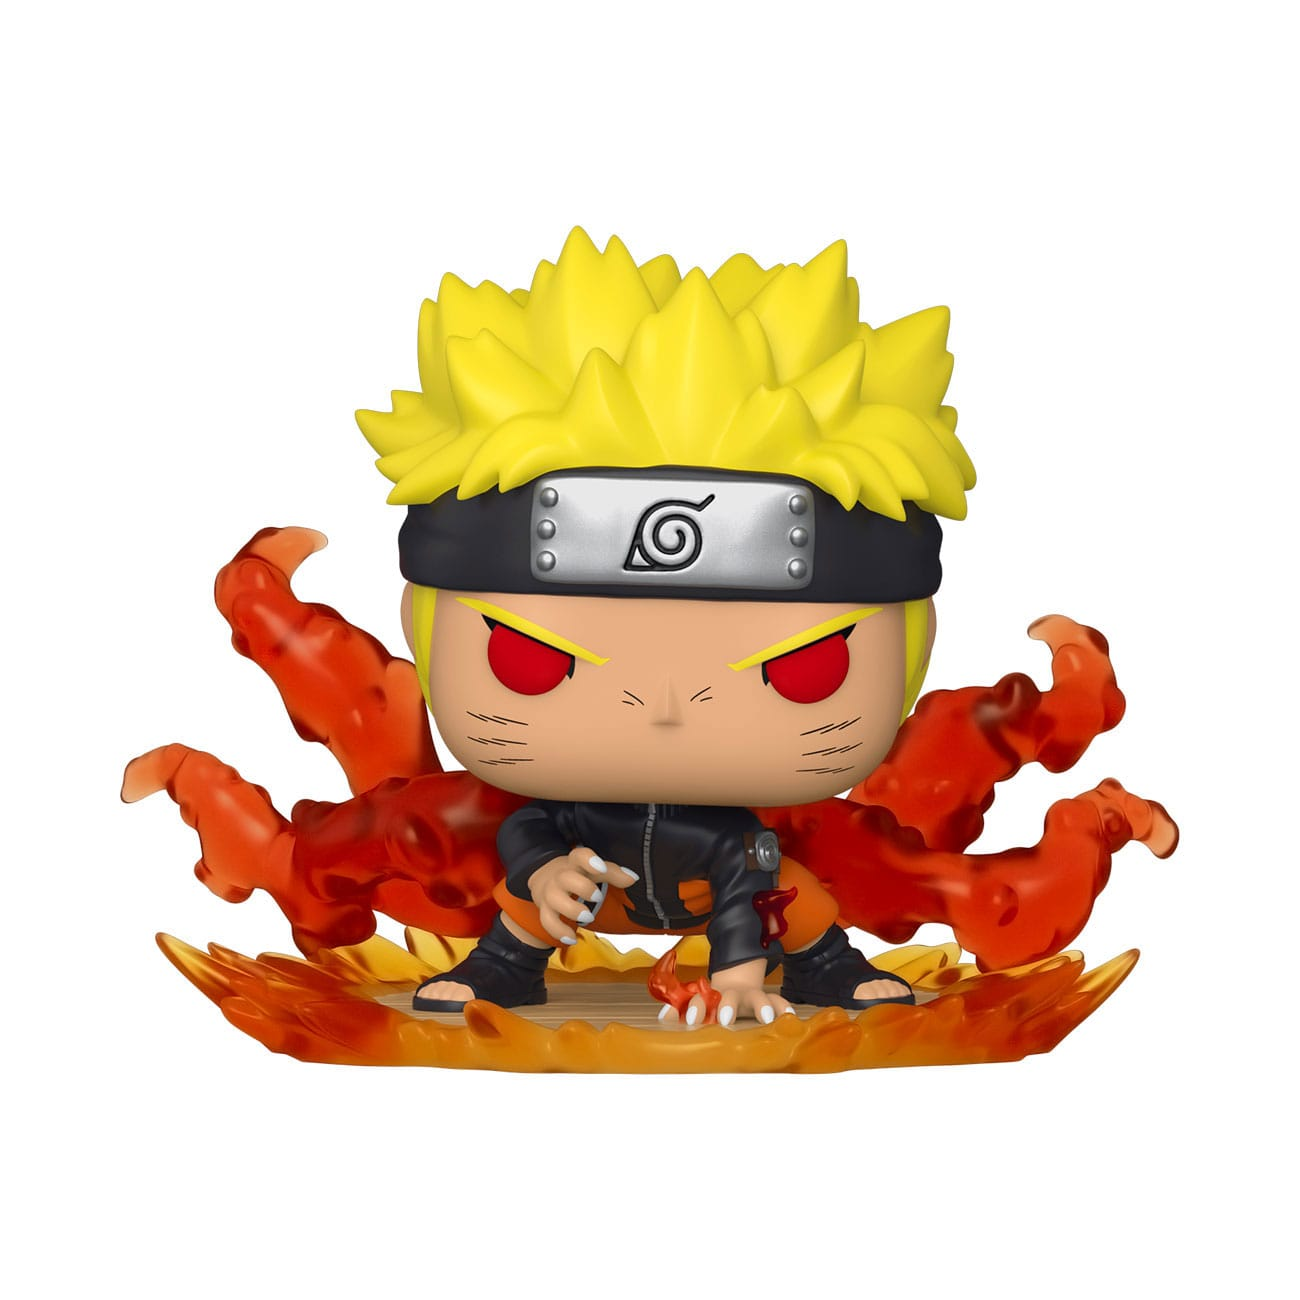 Uzumaki Naruto as POP Nine - Tails Deluxe